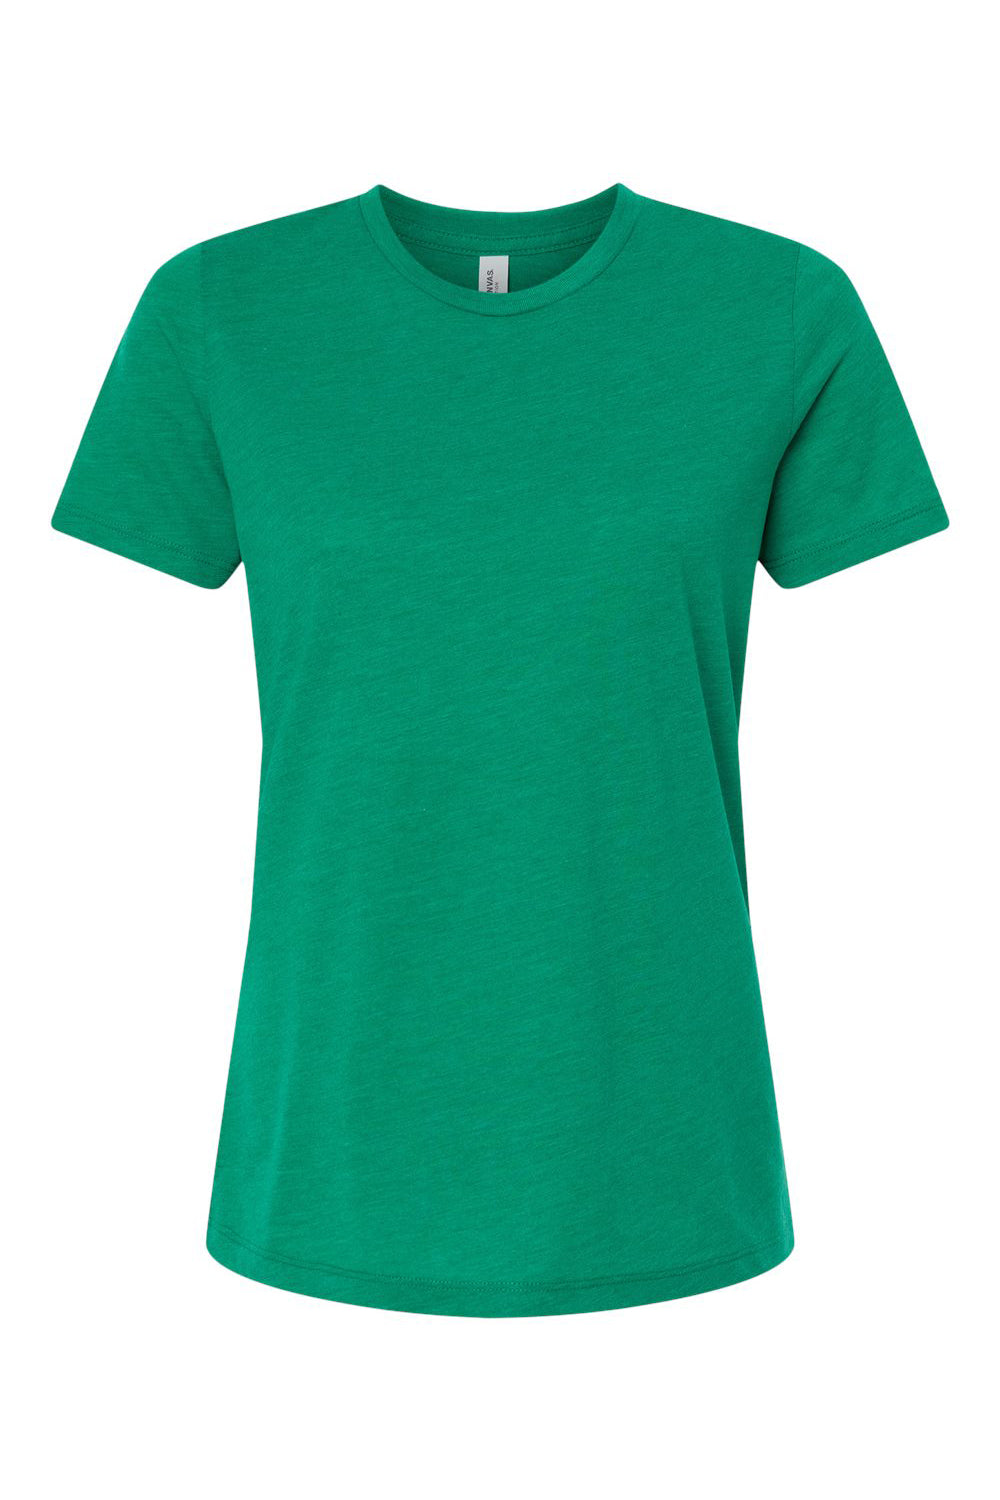 Bella + Canvas BC6413 Womens Short Sleeve Crewneck T-Shirt Kelly Green Flat Front